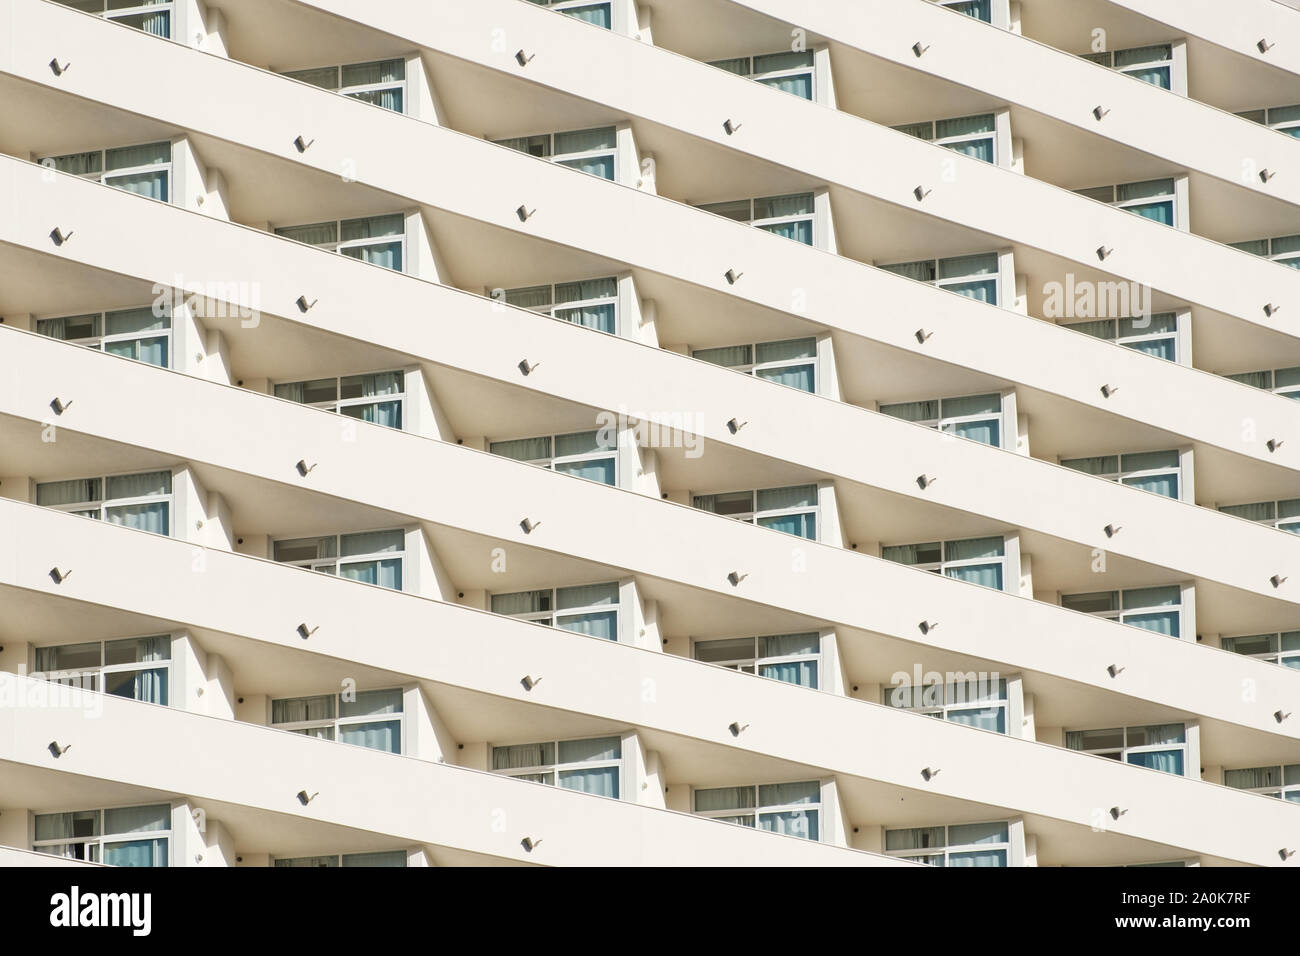 Großes Hotel oder Apartment Gebäude Fassade balkon Muster - Stockfoto